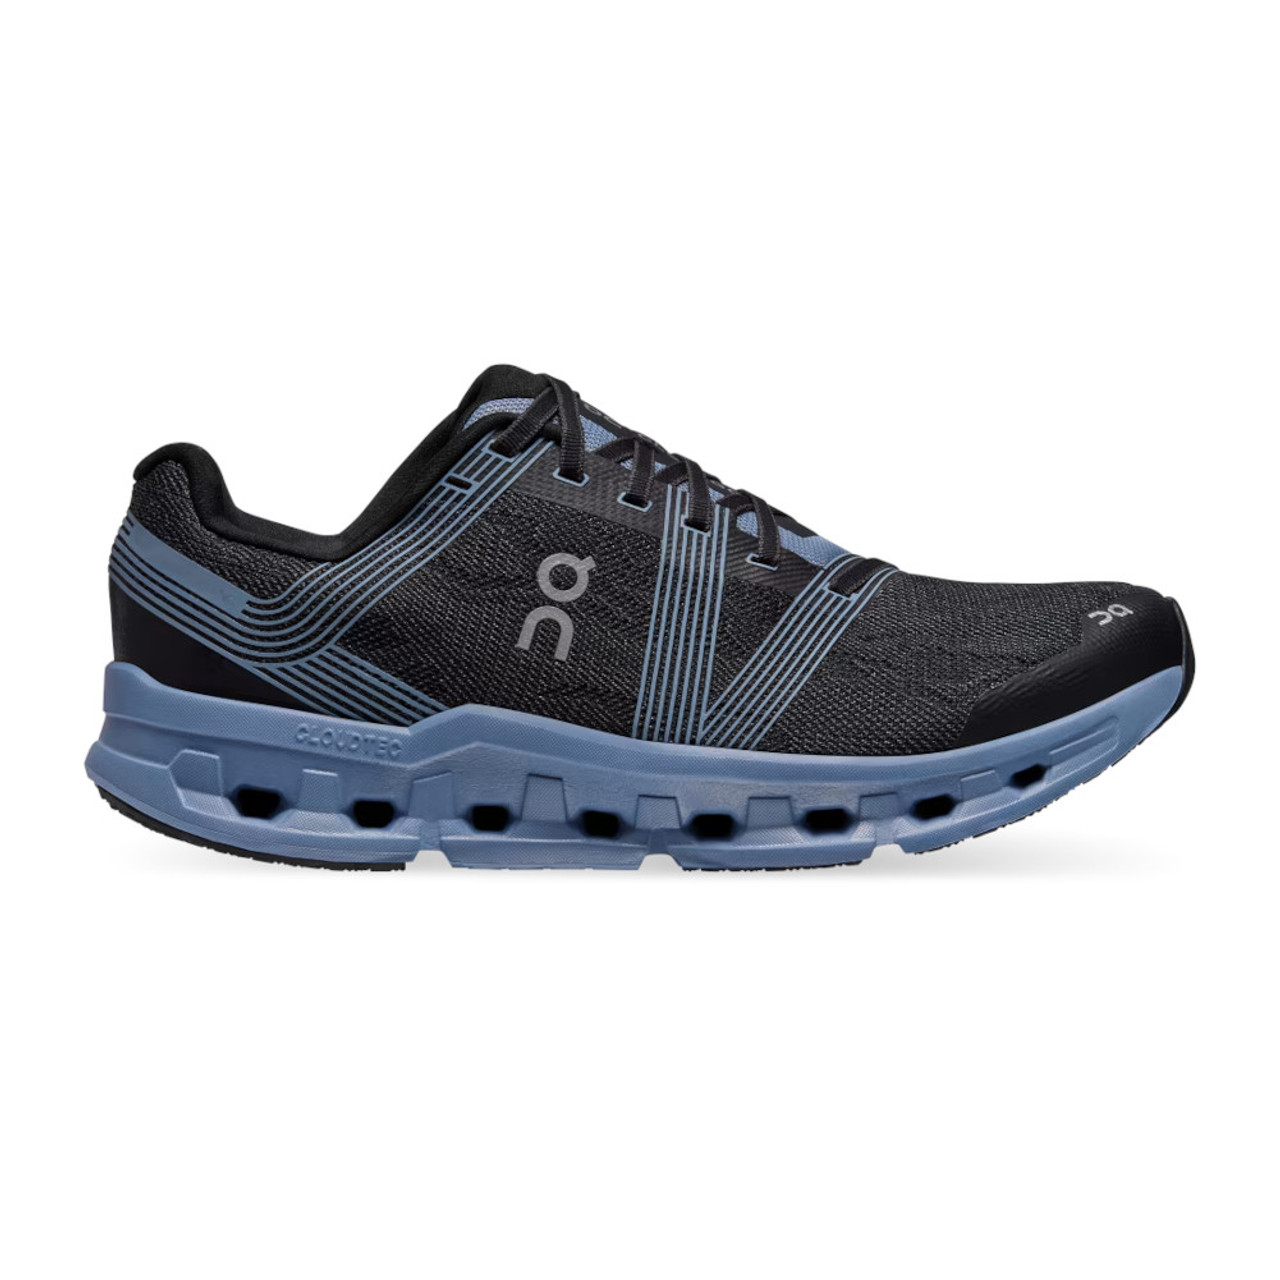 ON FOOTWEAR Men's Cloudgo Wide Road Running Shoes